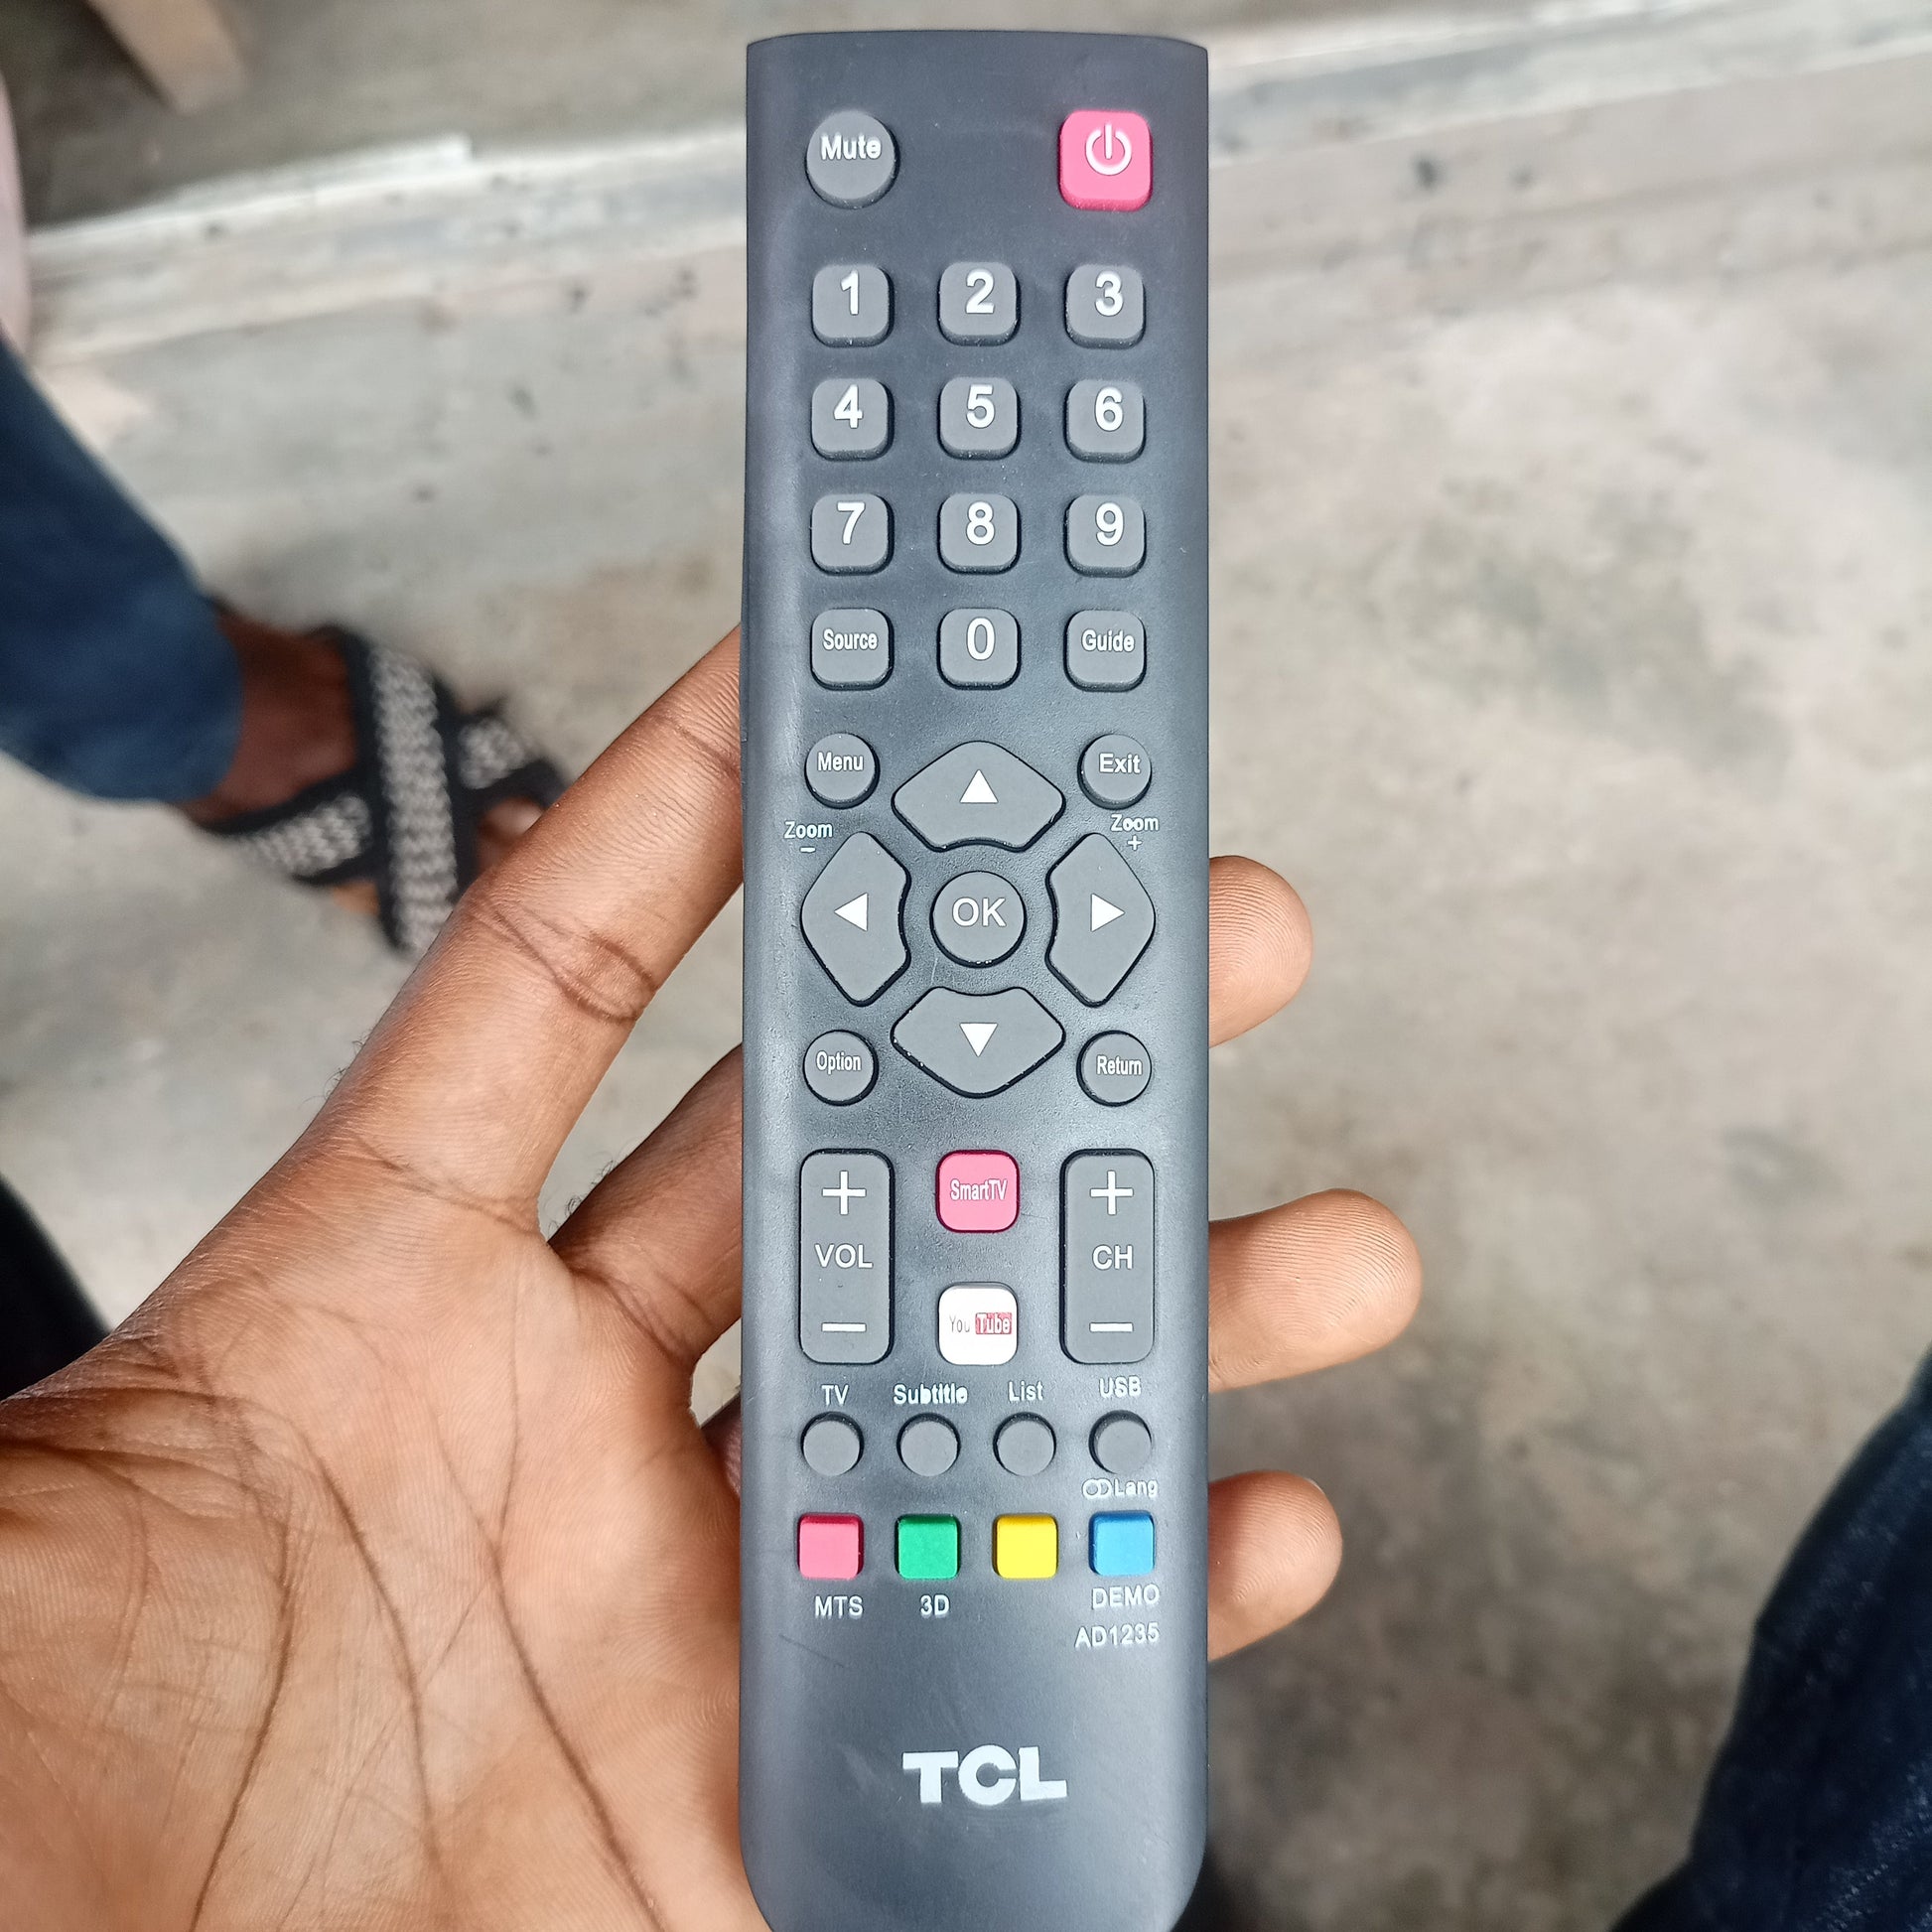 TCL 43 inch 43DP628 Smart 4K UHD LED TV (WiFi, Netflix, YouTube) - Remote